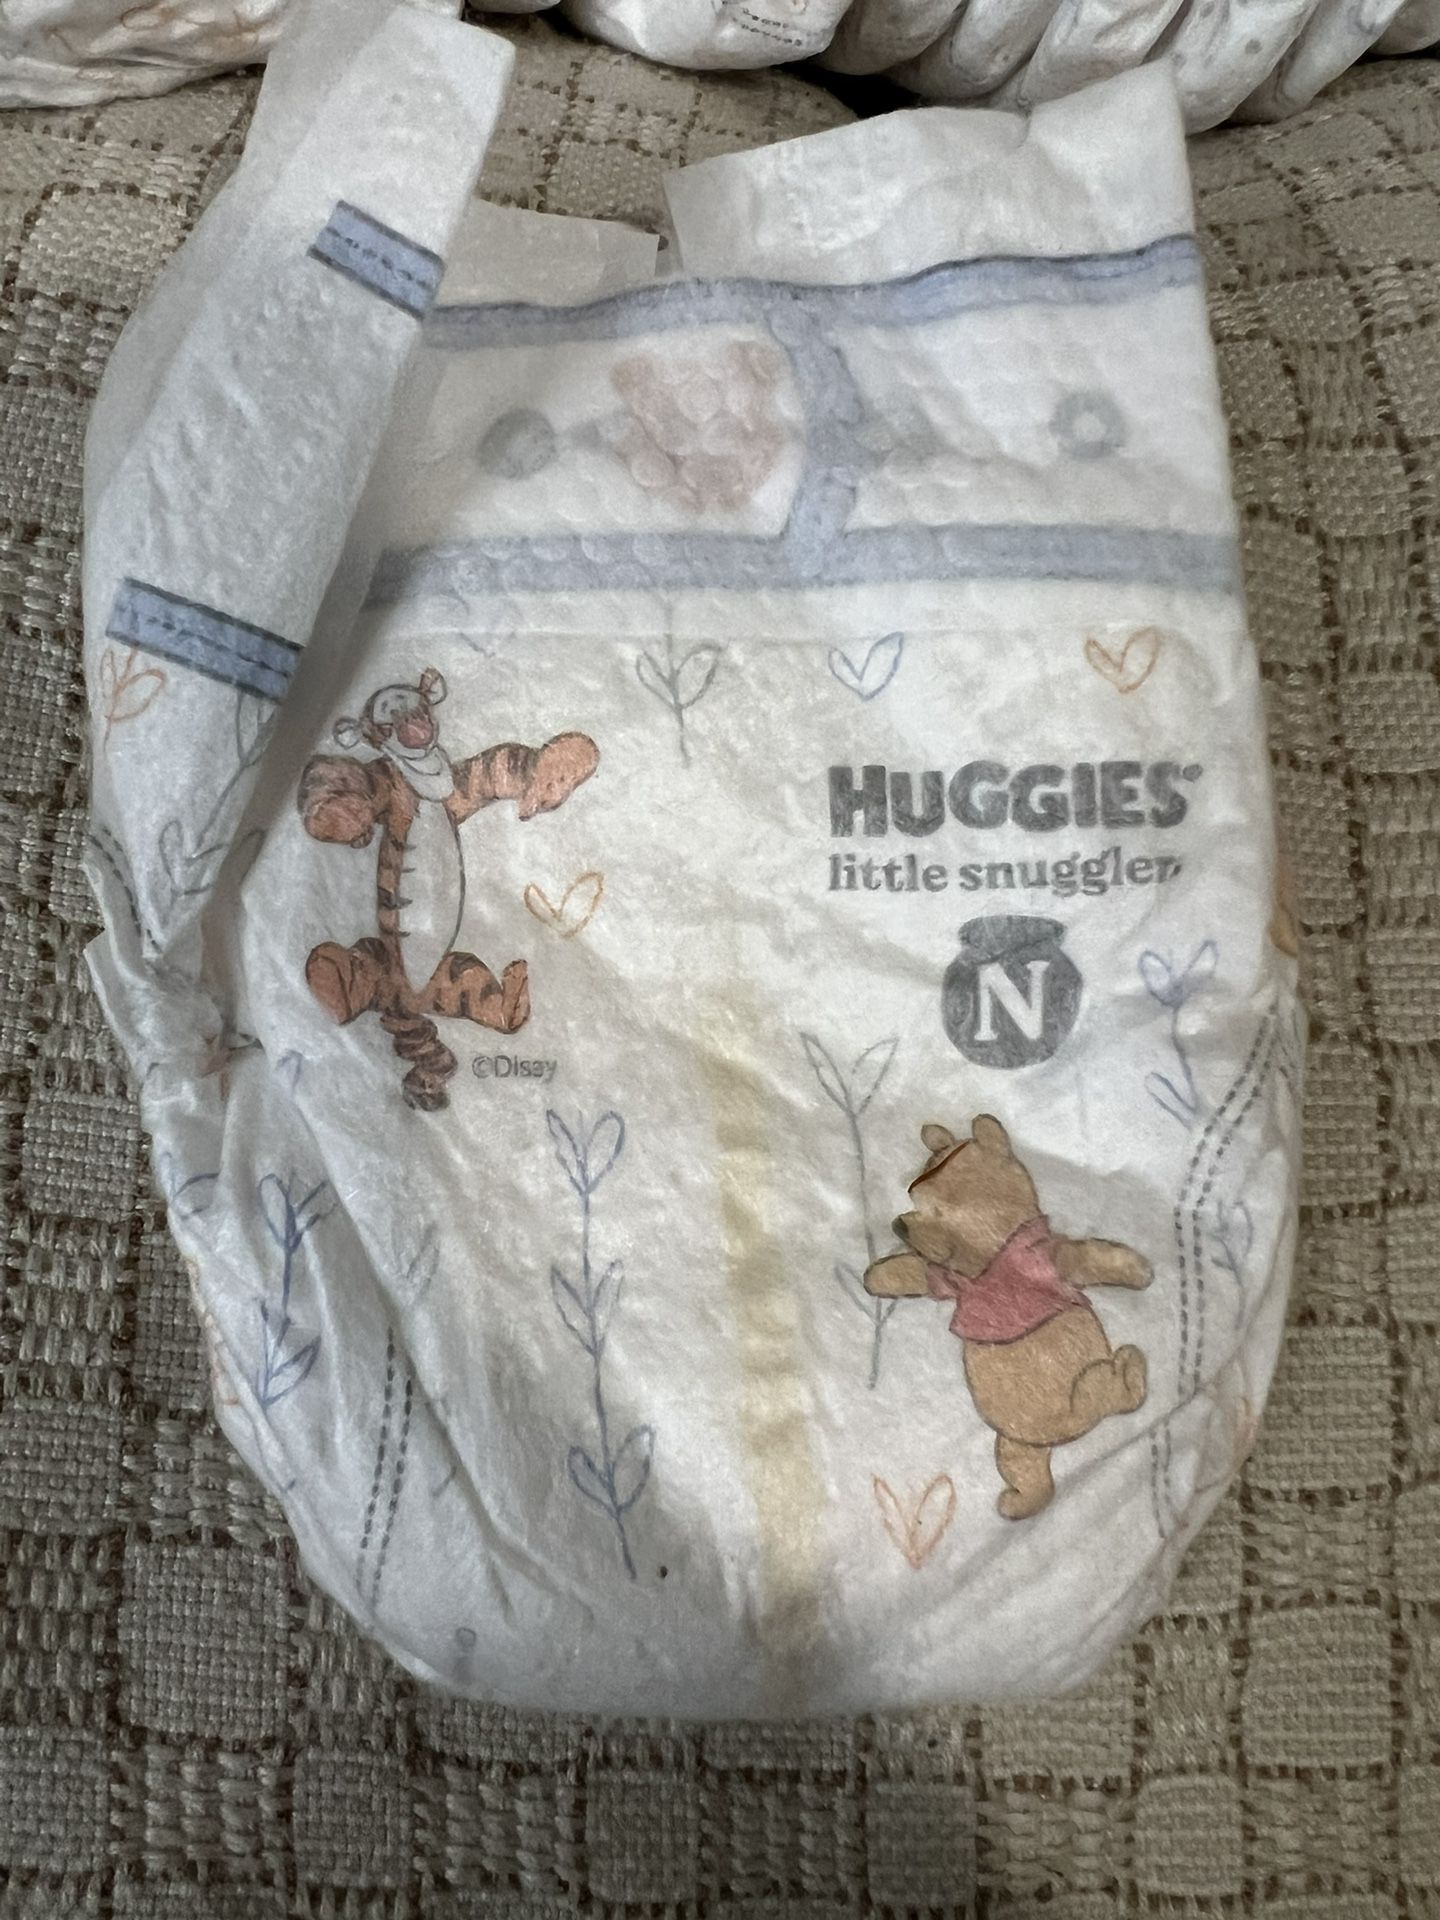 Free newborn Diapers, Huggies 